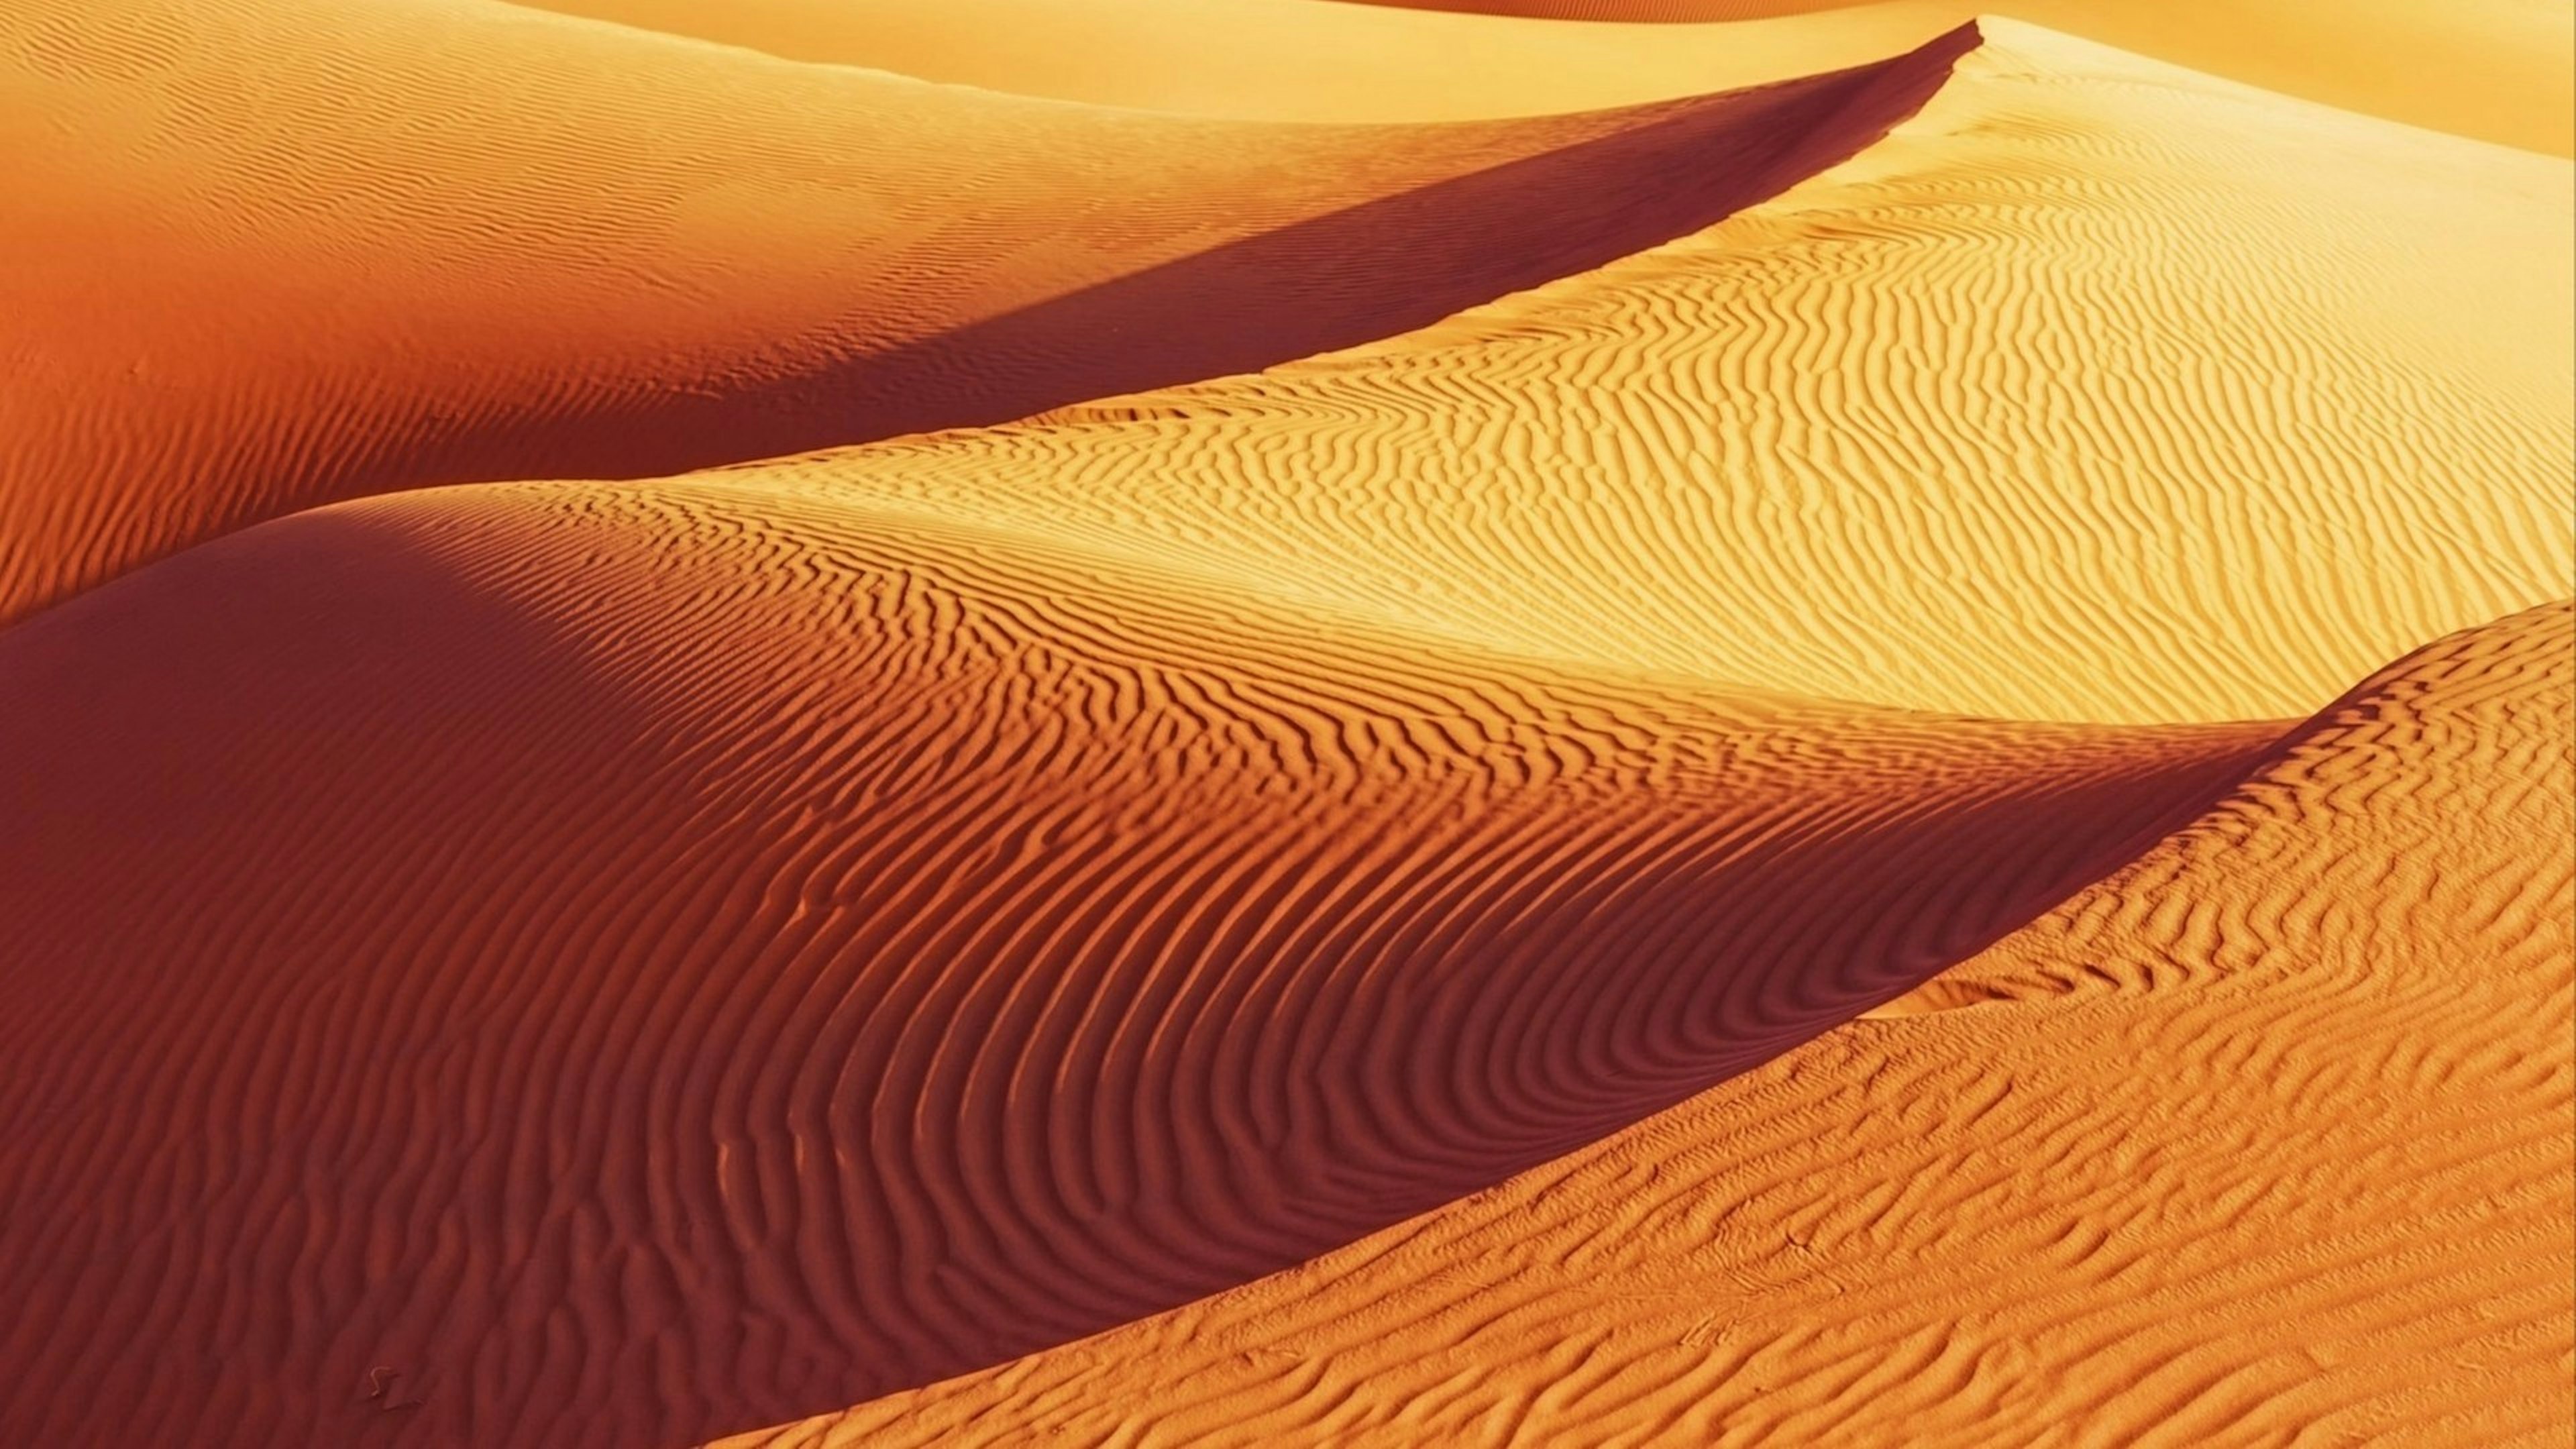 Sand dunes in the desert of Kuwait